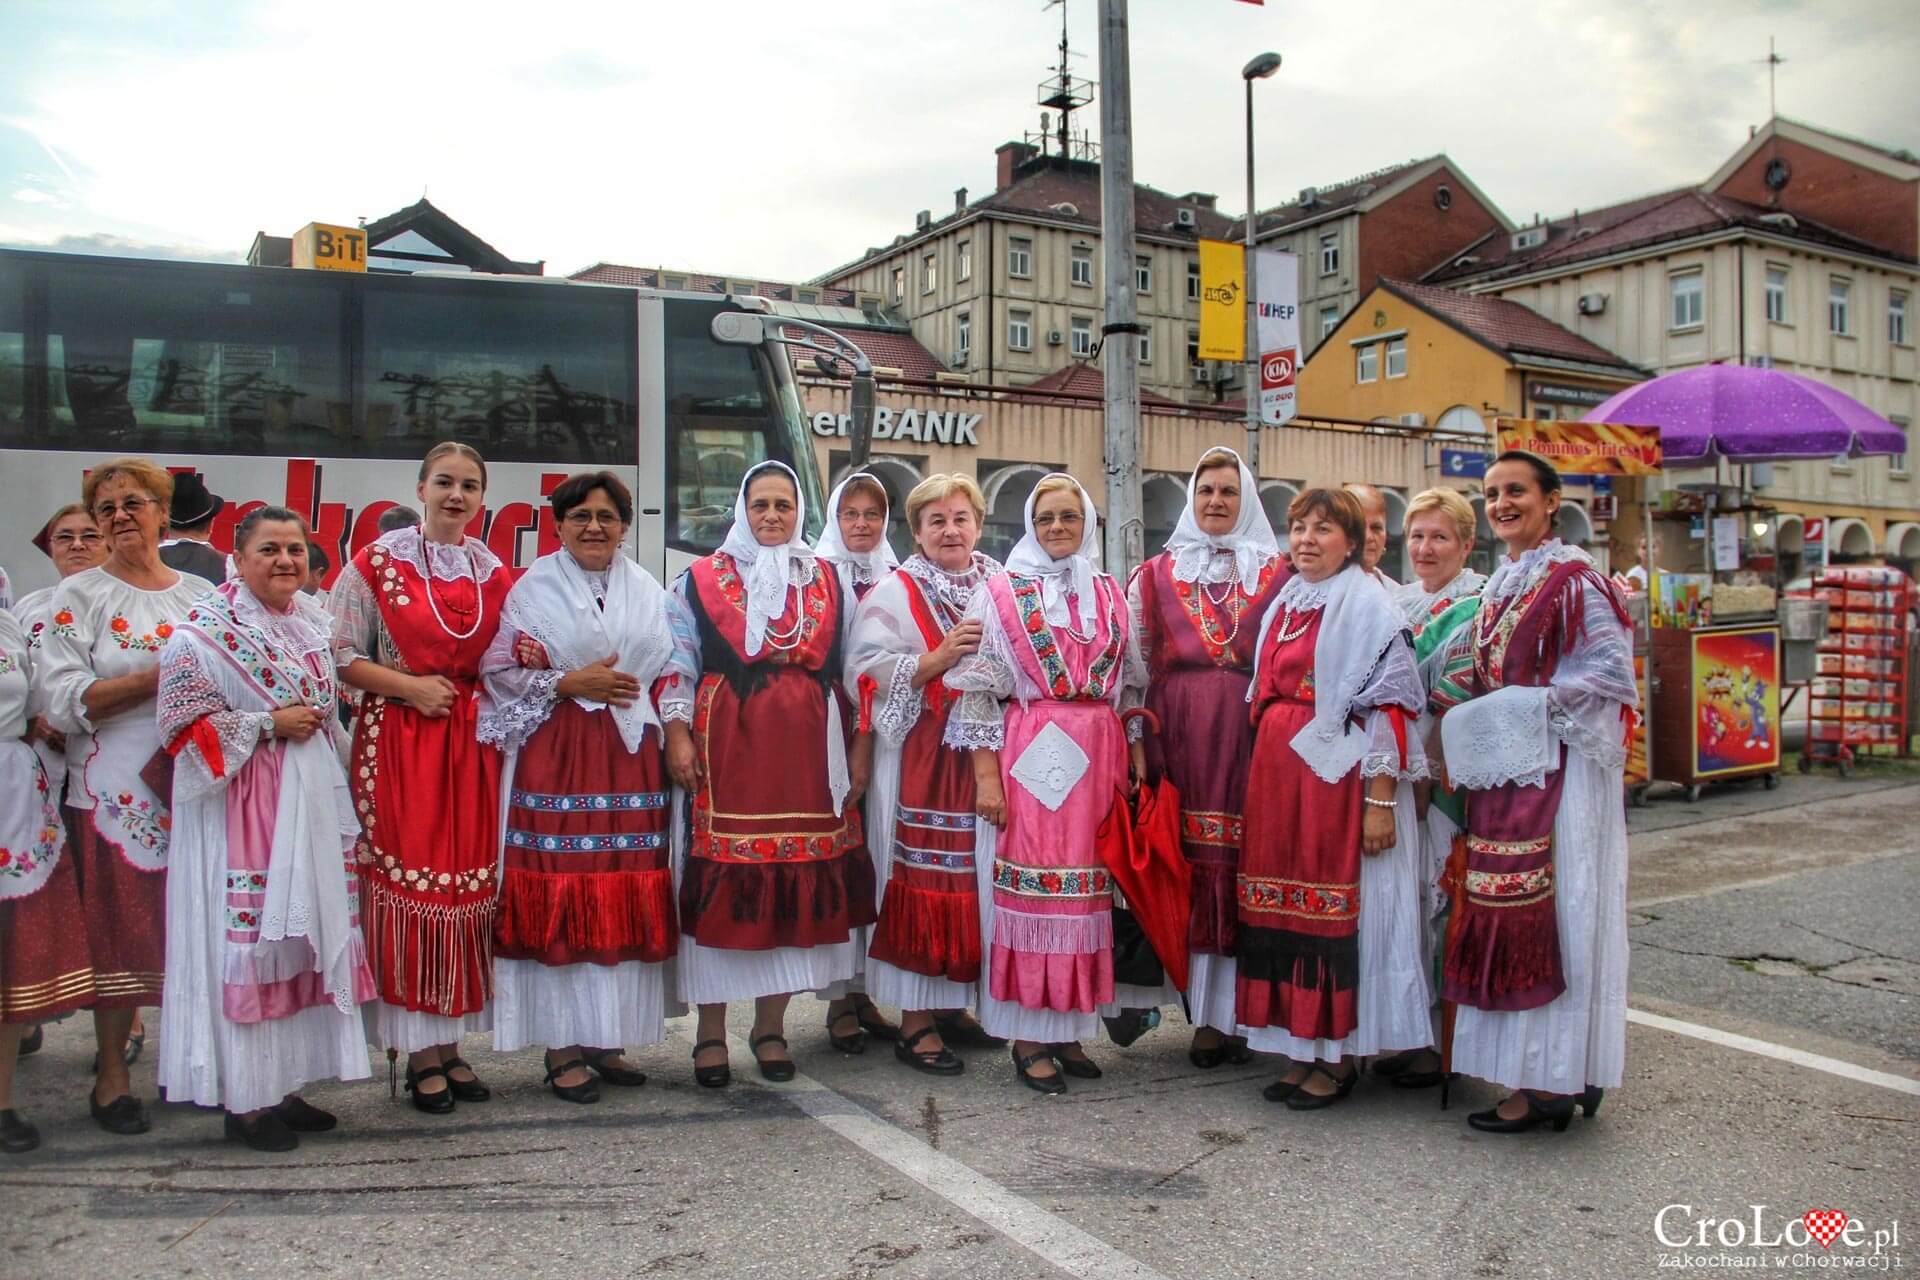 Festiwal Vinkovačke Jeseni w Vinkovci